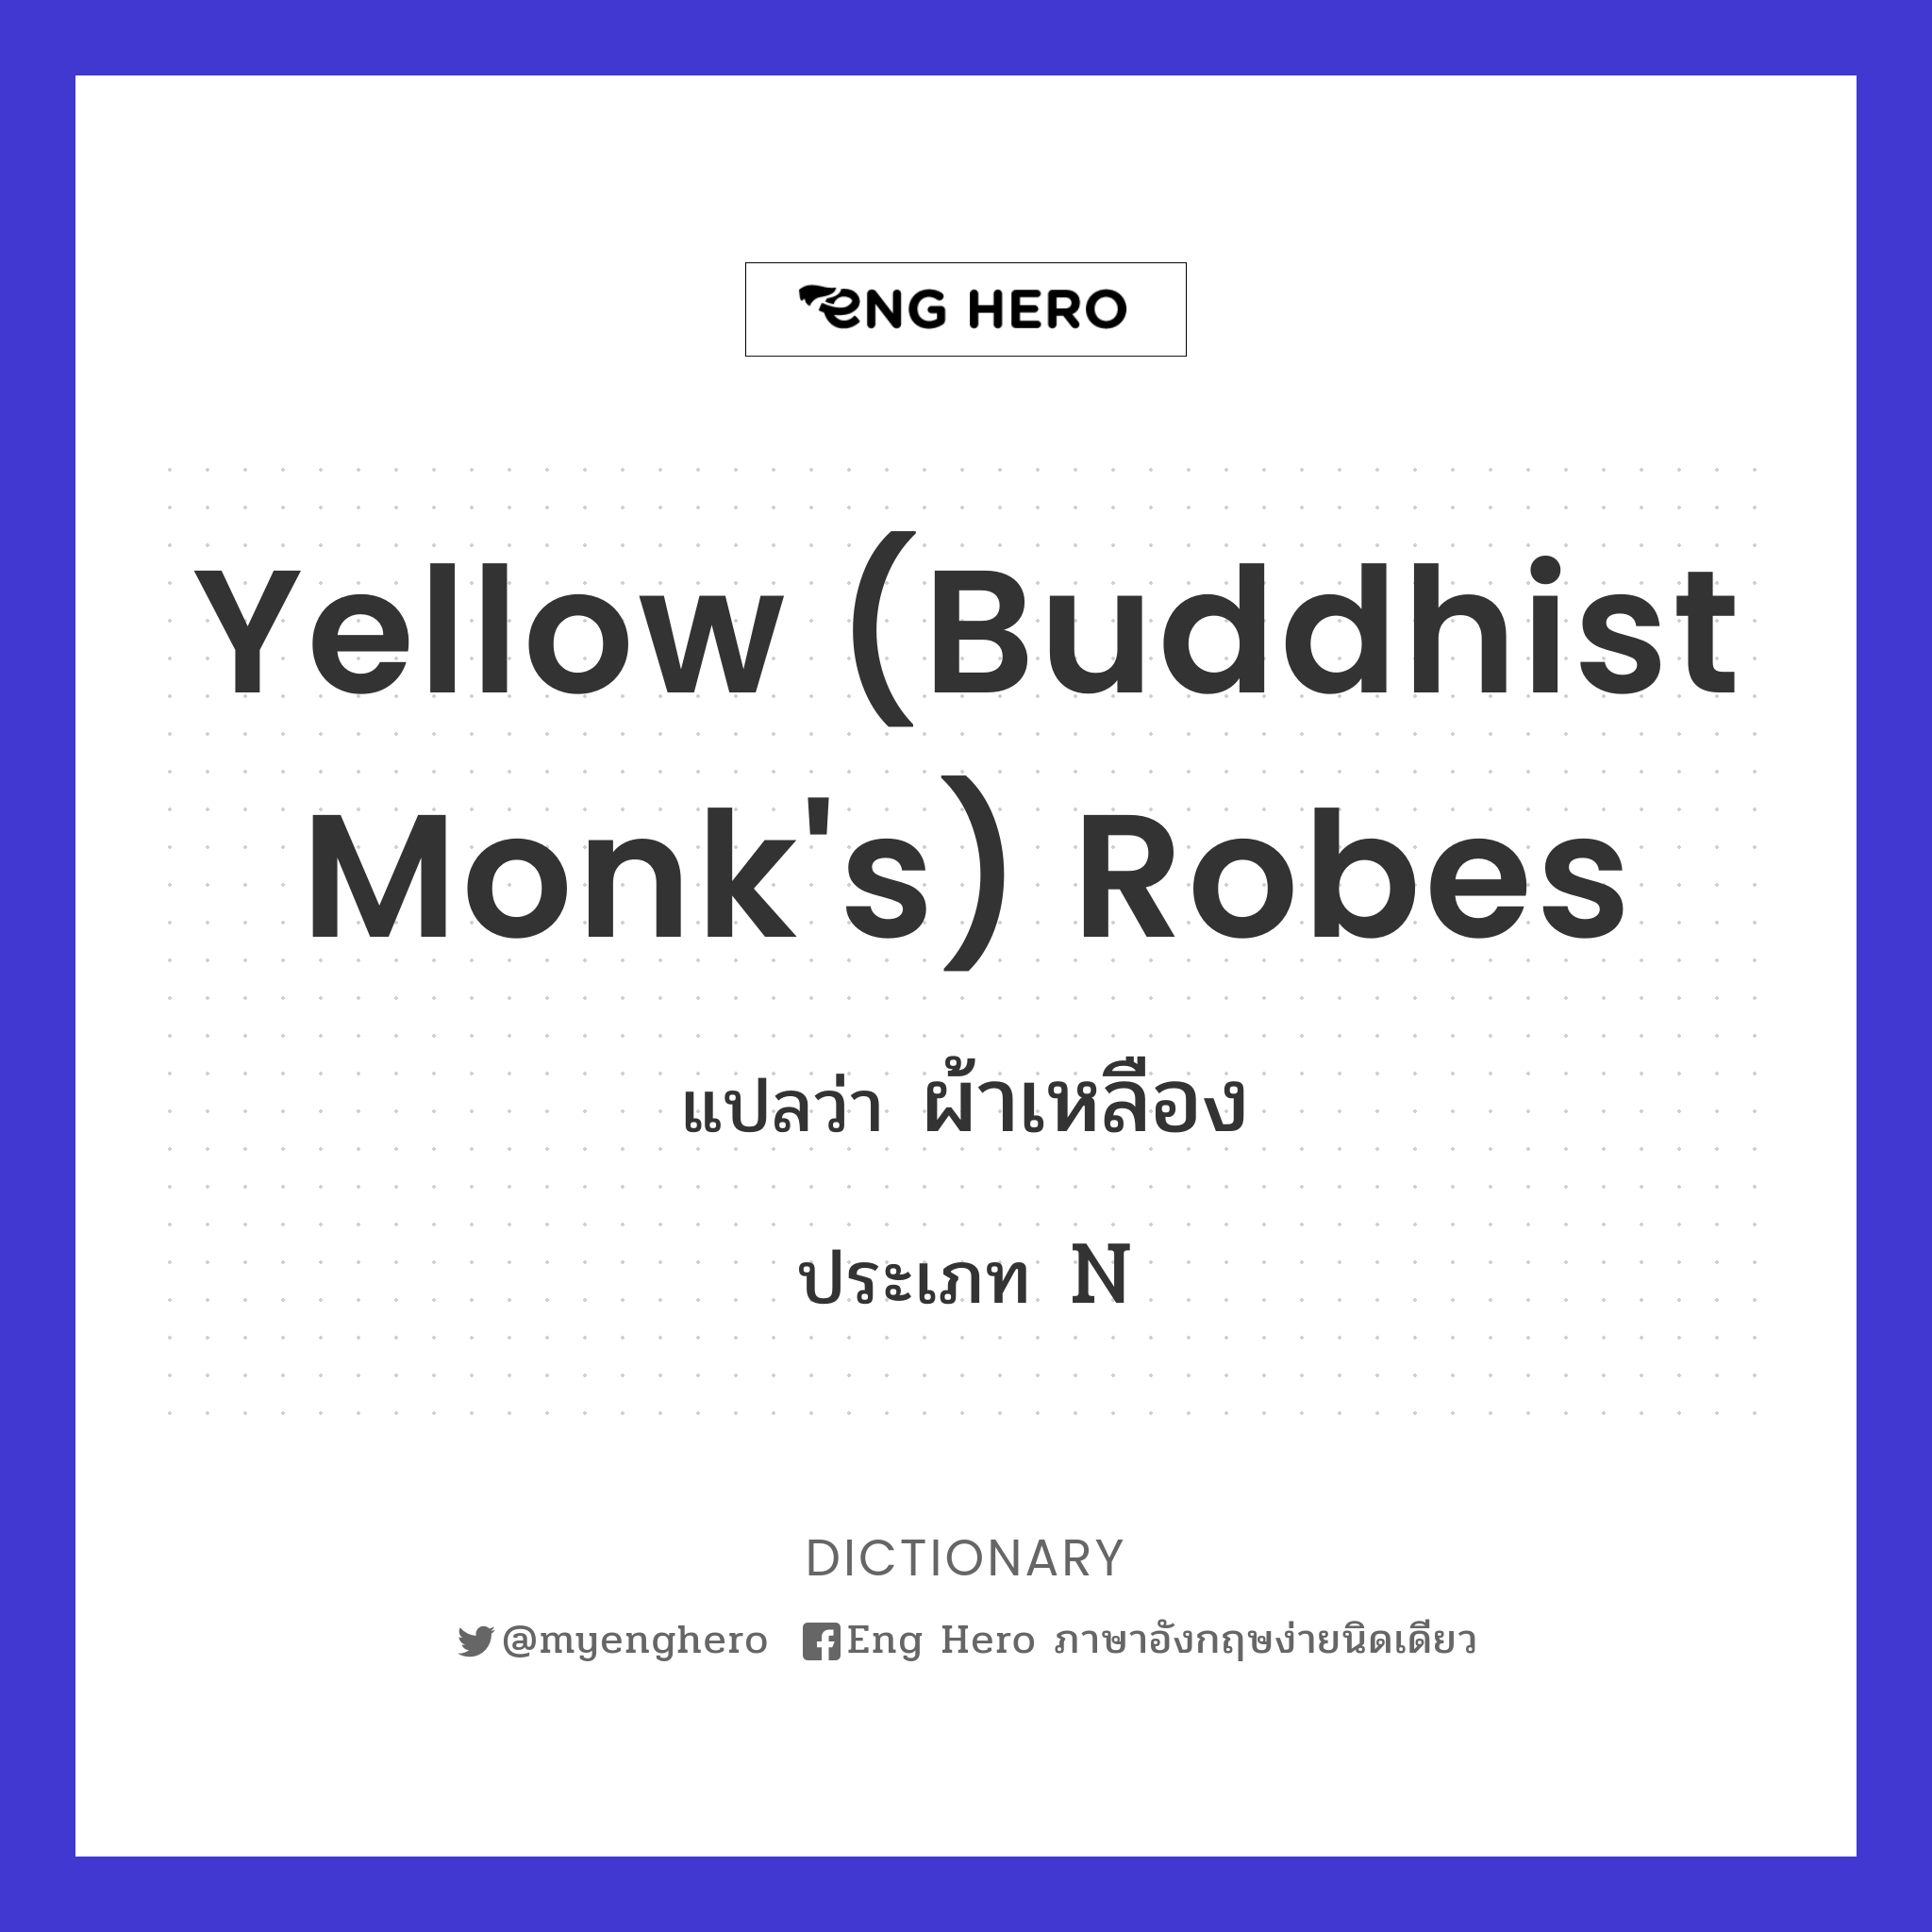 yellow (Buddhist monk's) robes